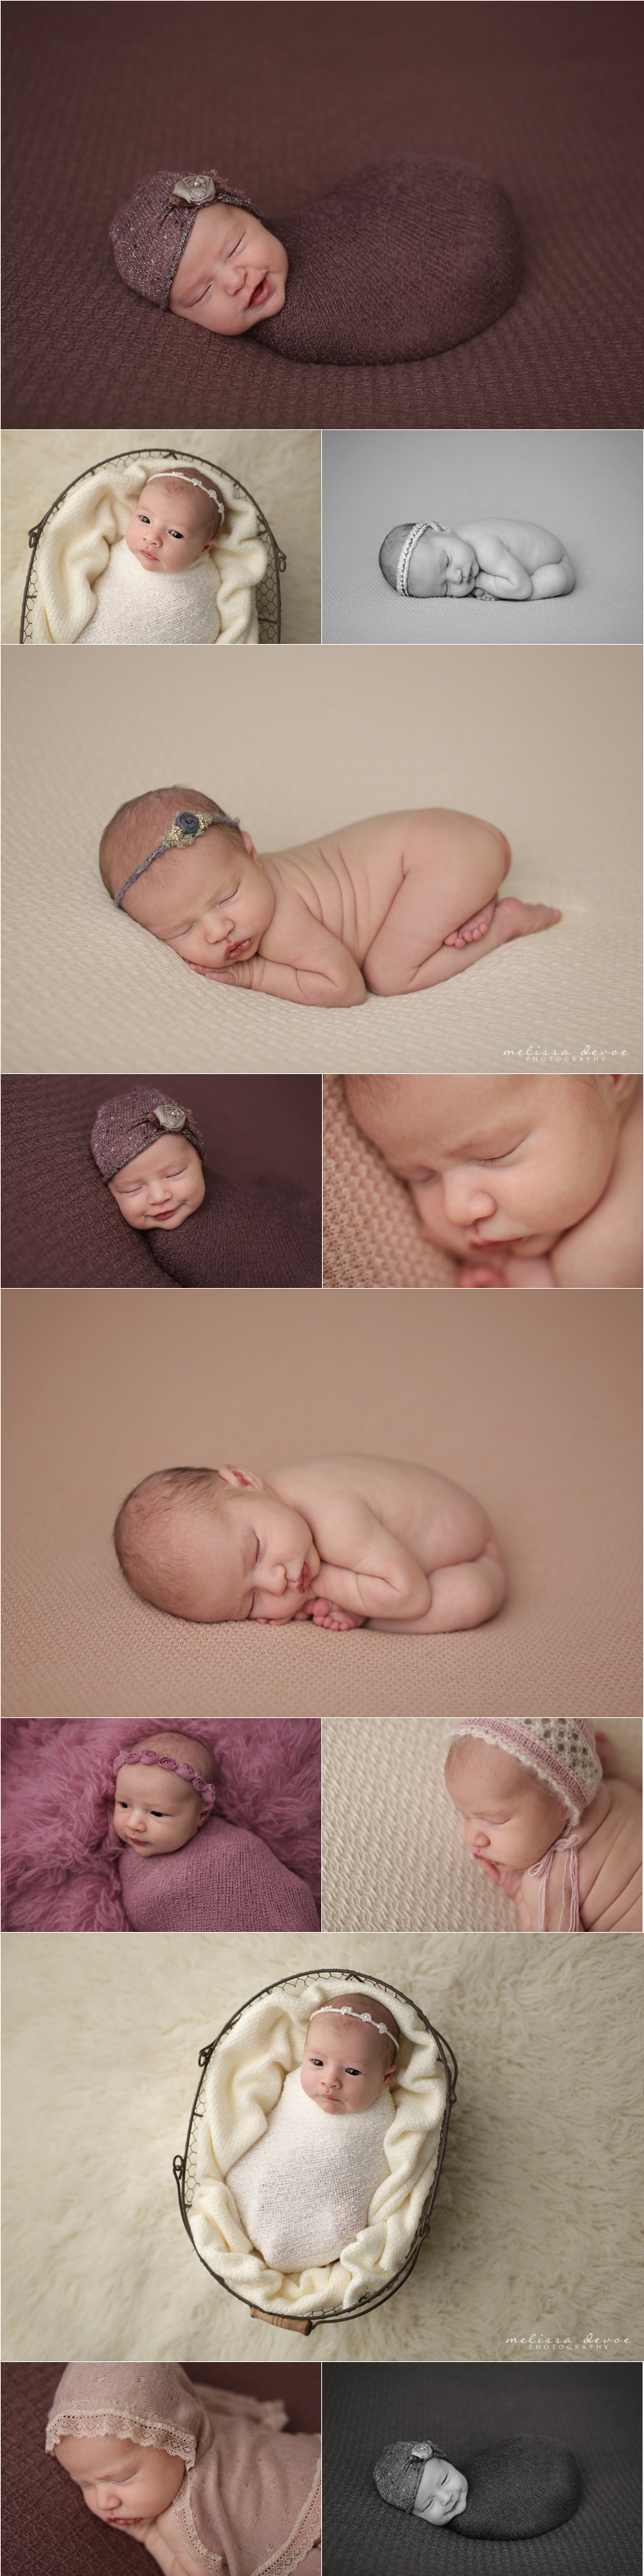 Raleigh Newborn Baby Photographer Melissa DeVoe 1